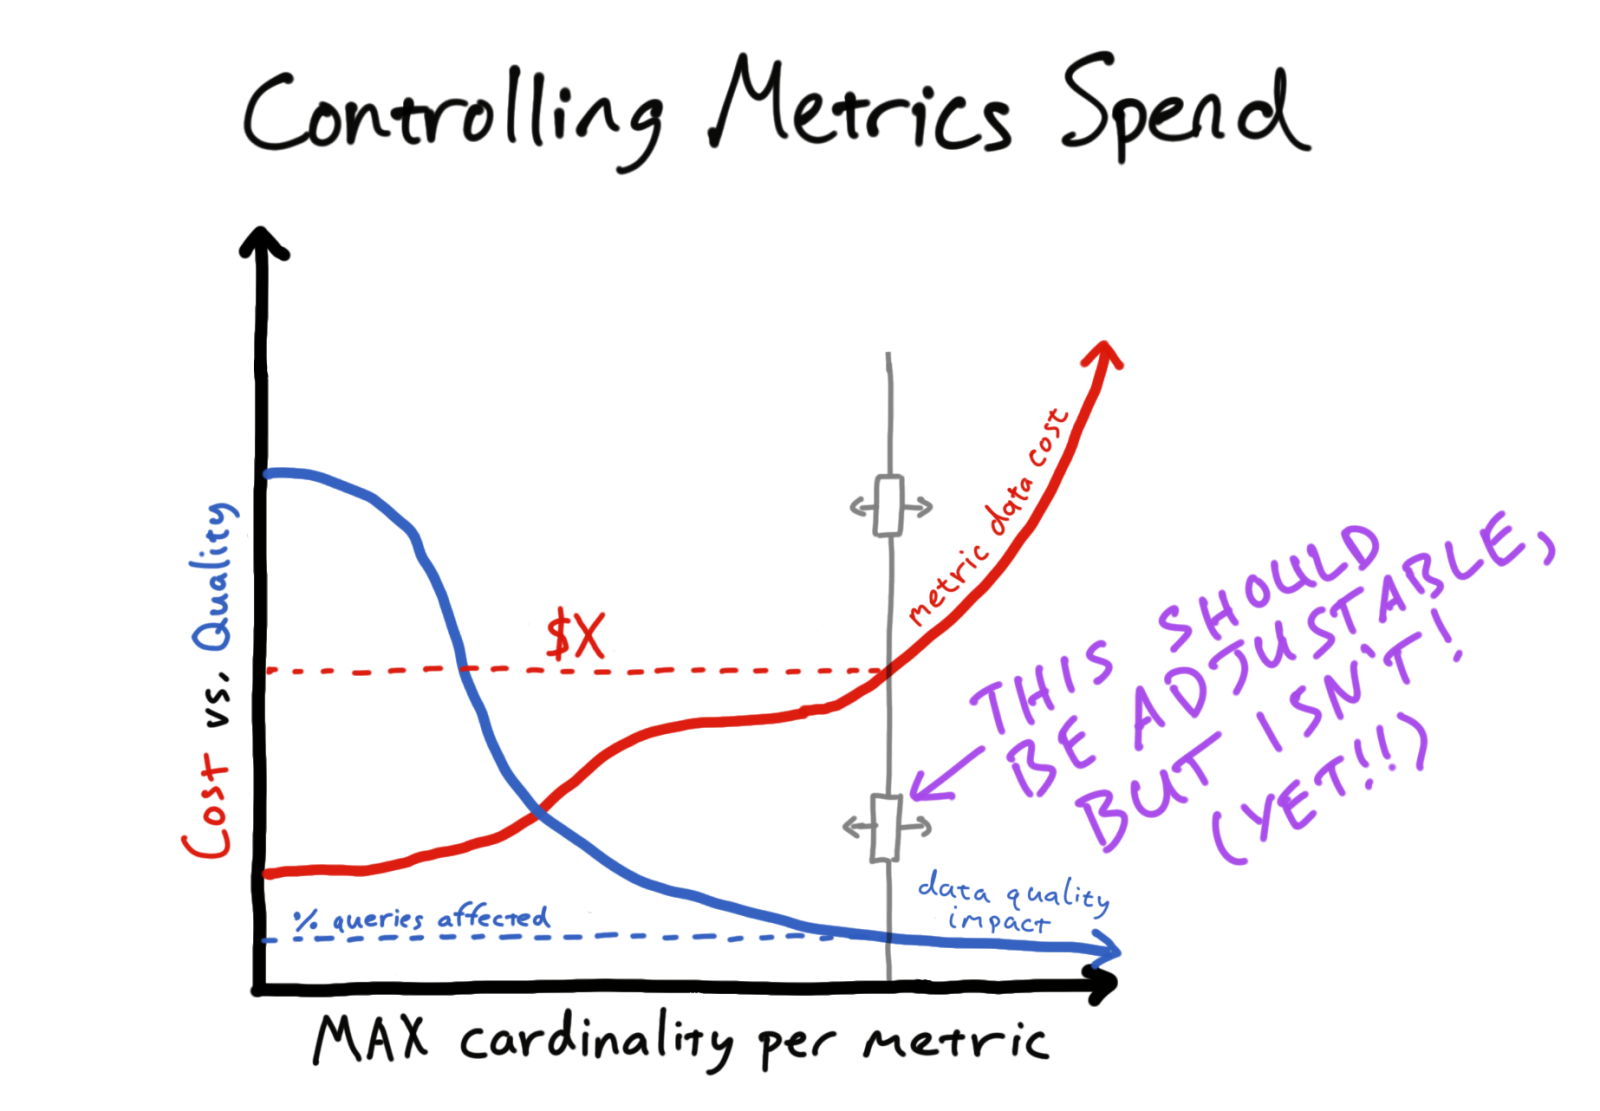 Controlling Metrics Spend